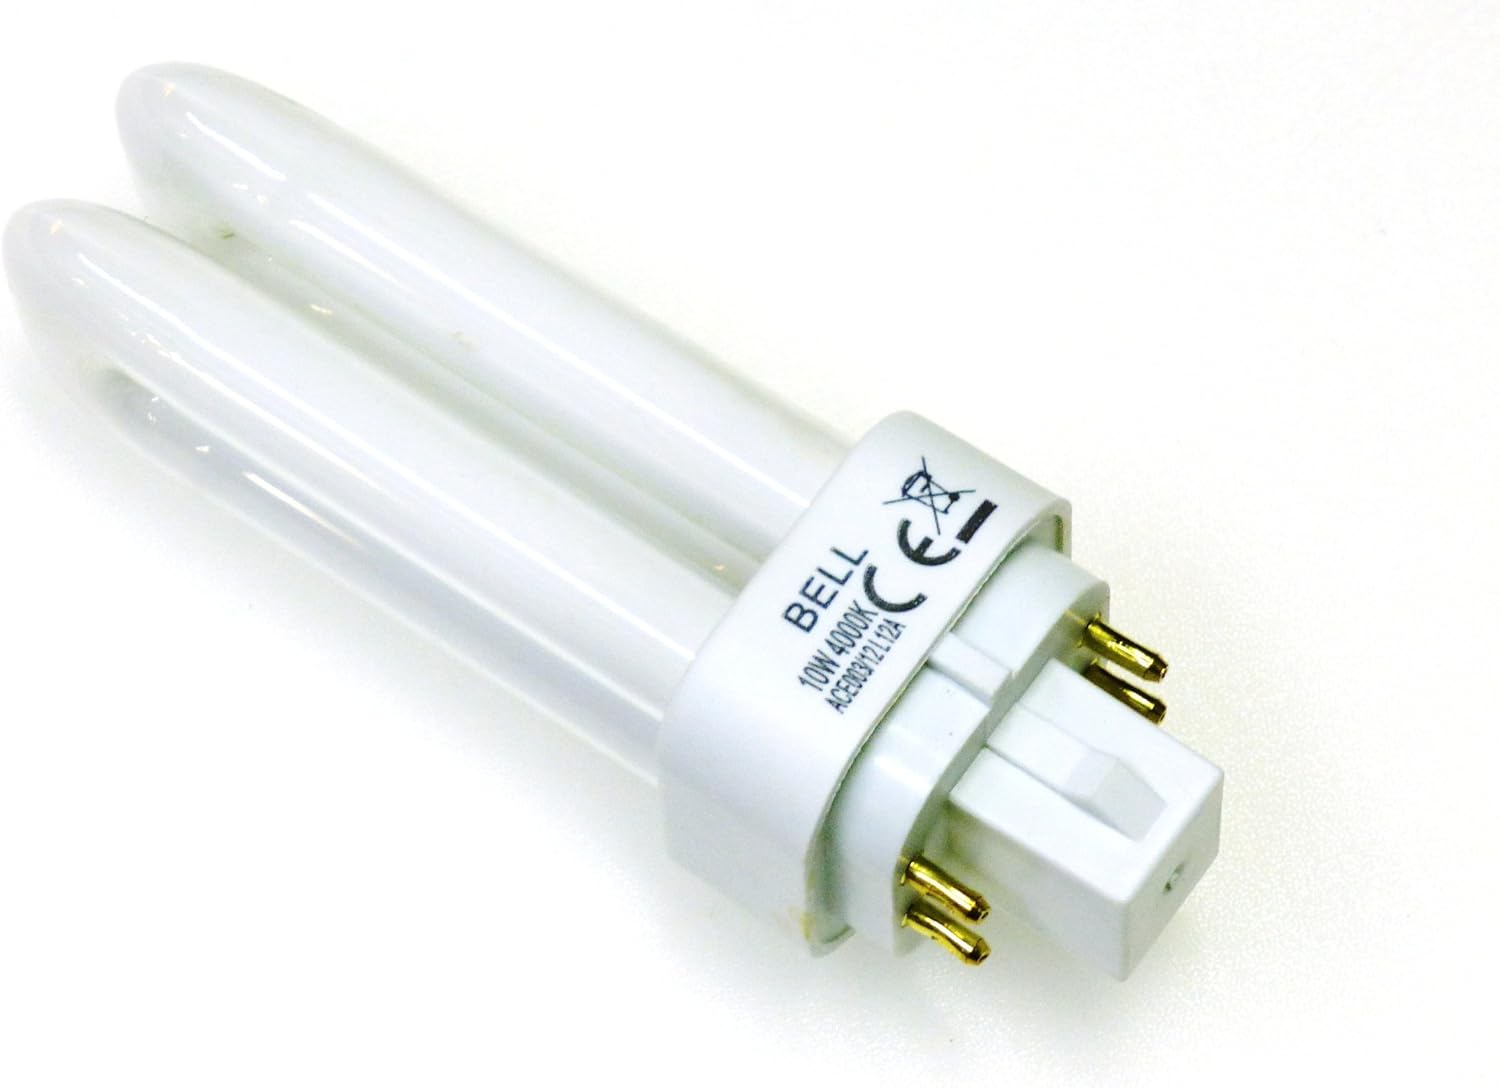 4x 10 watt Energy Saving Lamp CFL 4 pin 10W Cool White 840 G24q-1 Double turn BELL